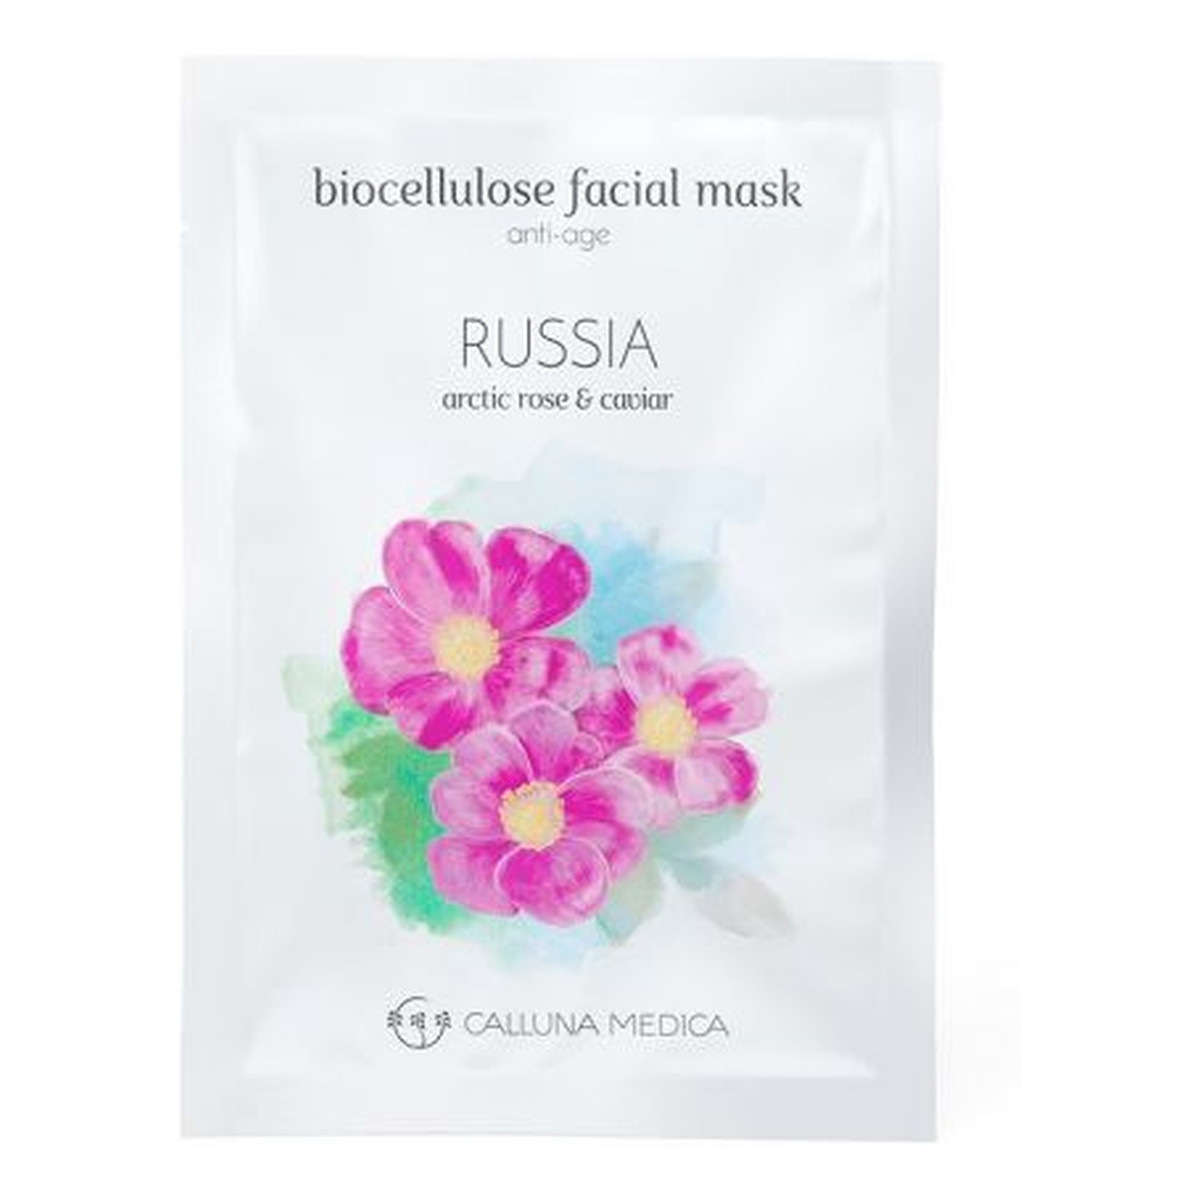 Calluna Medica Russia Anti-Age Biocellulose Facial Mask przeciwstarzeniowa maseczka z biocelulozy Arctic Rose & Caviar 12ml